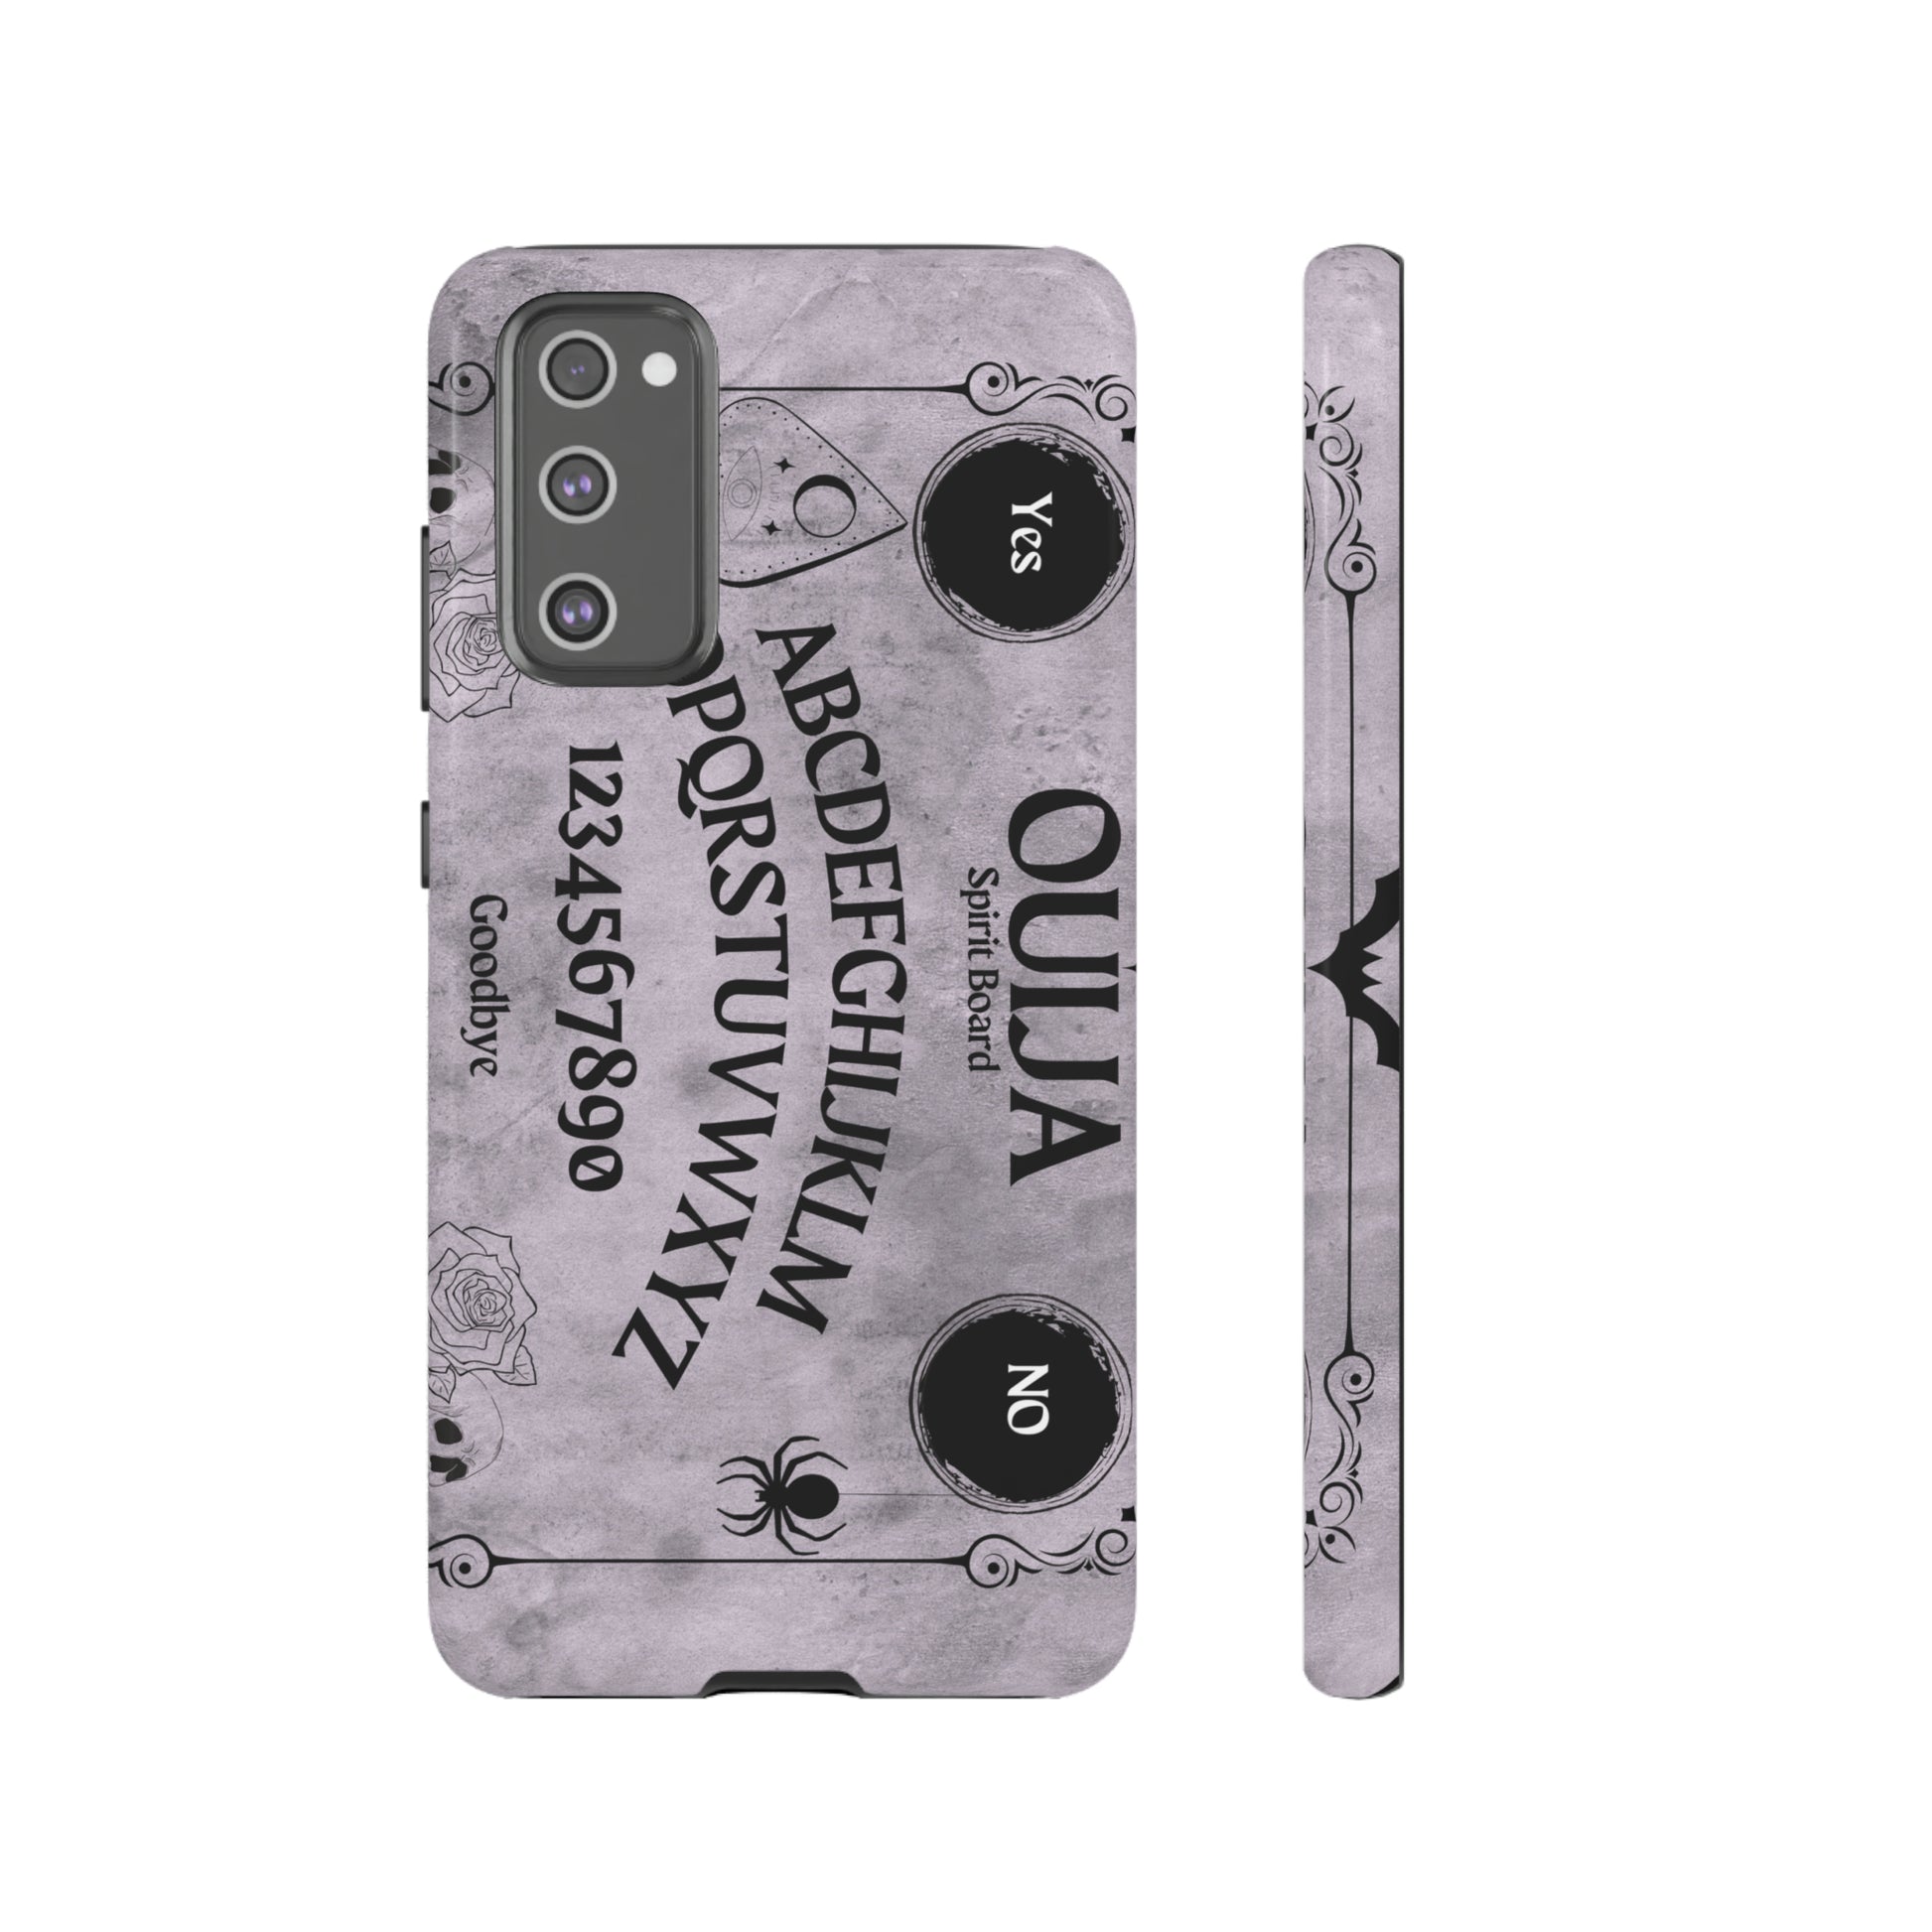 Ouija Board Tough Phone Cases For Samsung iPhone GooglePhone CaseVTZdesignsSamsung Galaxy S20 FEGlossyAccessoriesGlossyhalloween